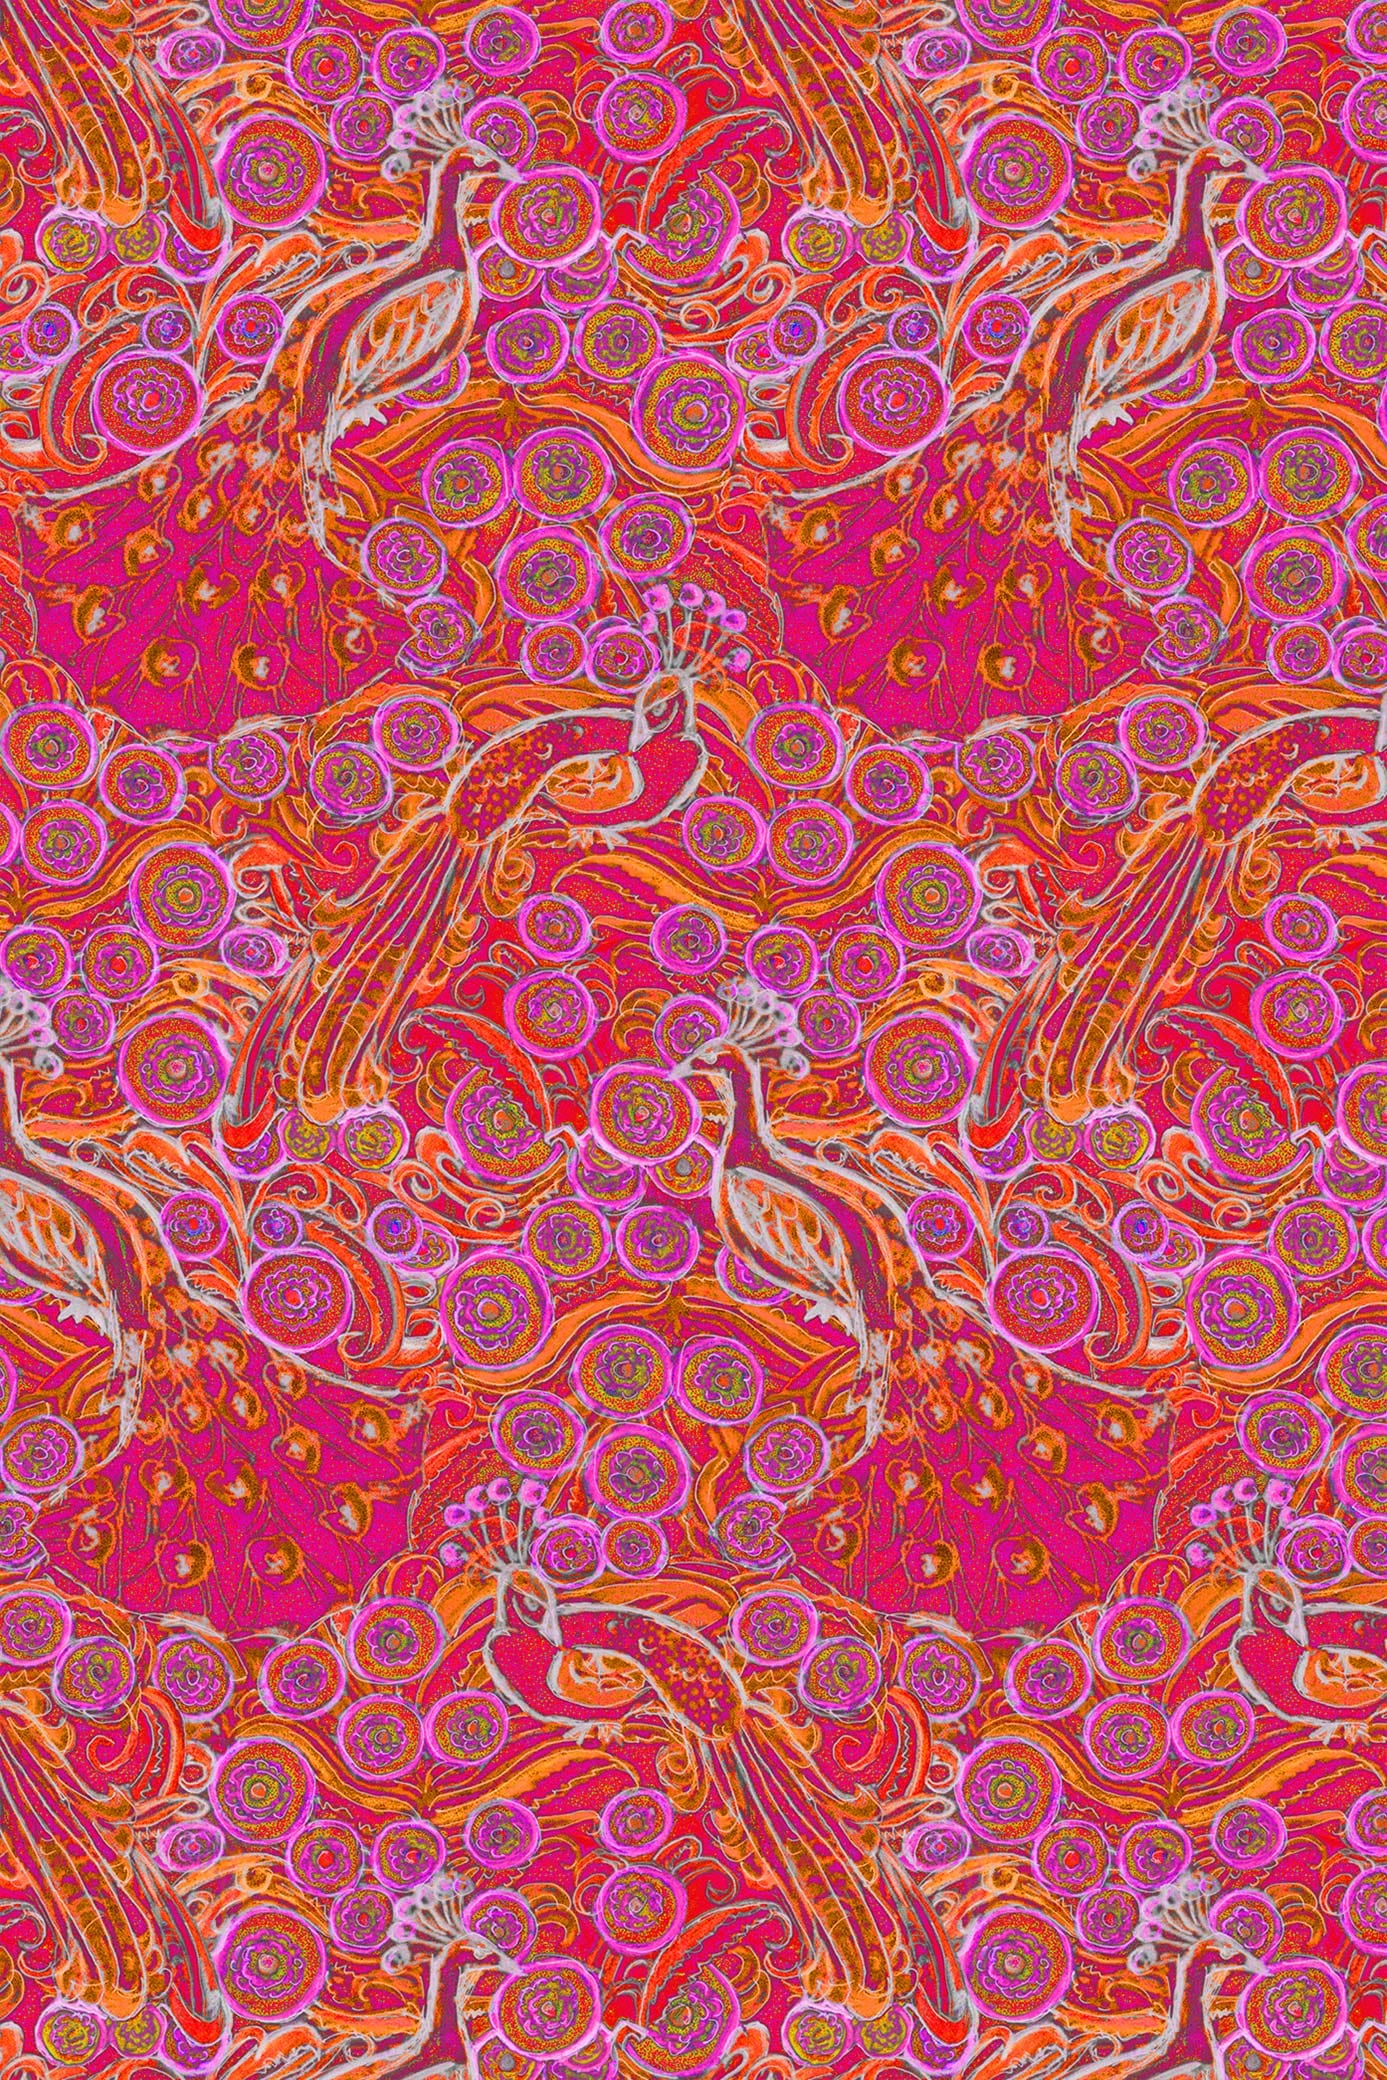 W.E.T. by Ines Schneider Dress Greta / Pavone mode hamburg print sommerkleid Unique Prints Summer Dress Handdesignierte Prints Print